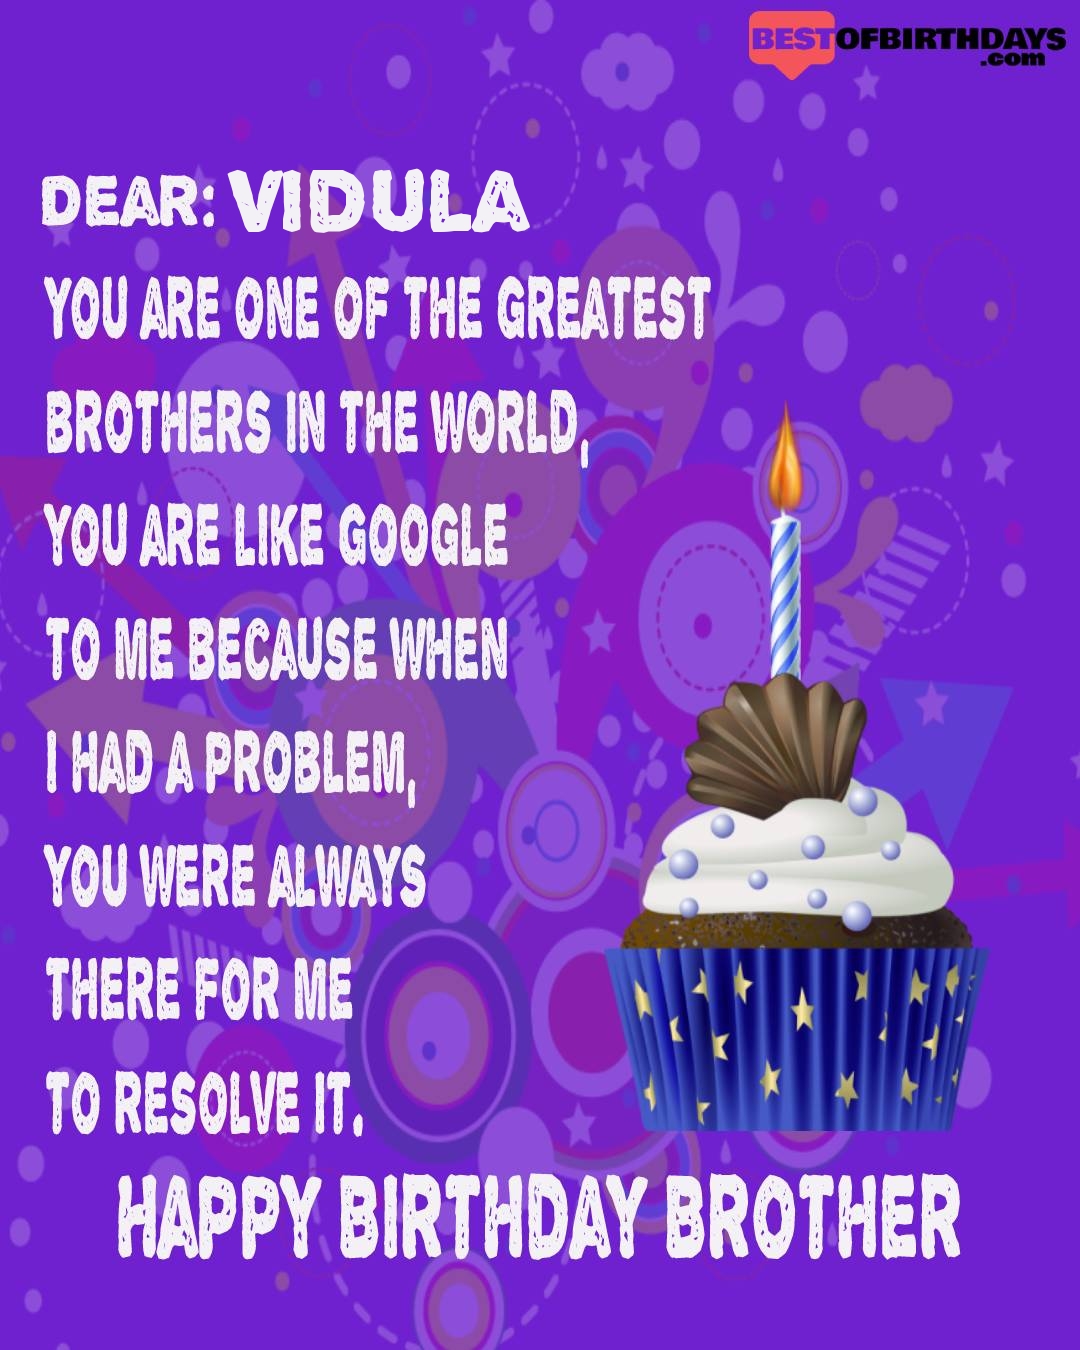 Happy birthday vidula bhai brother bro